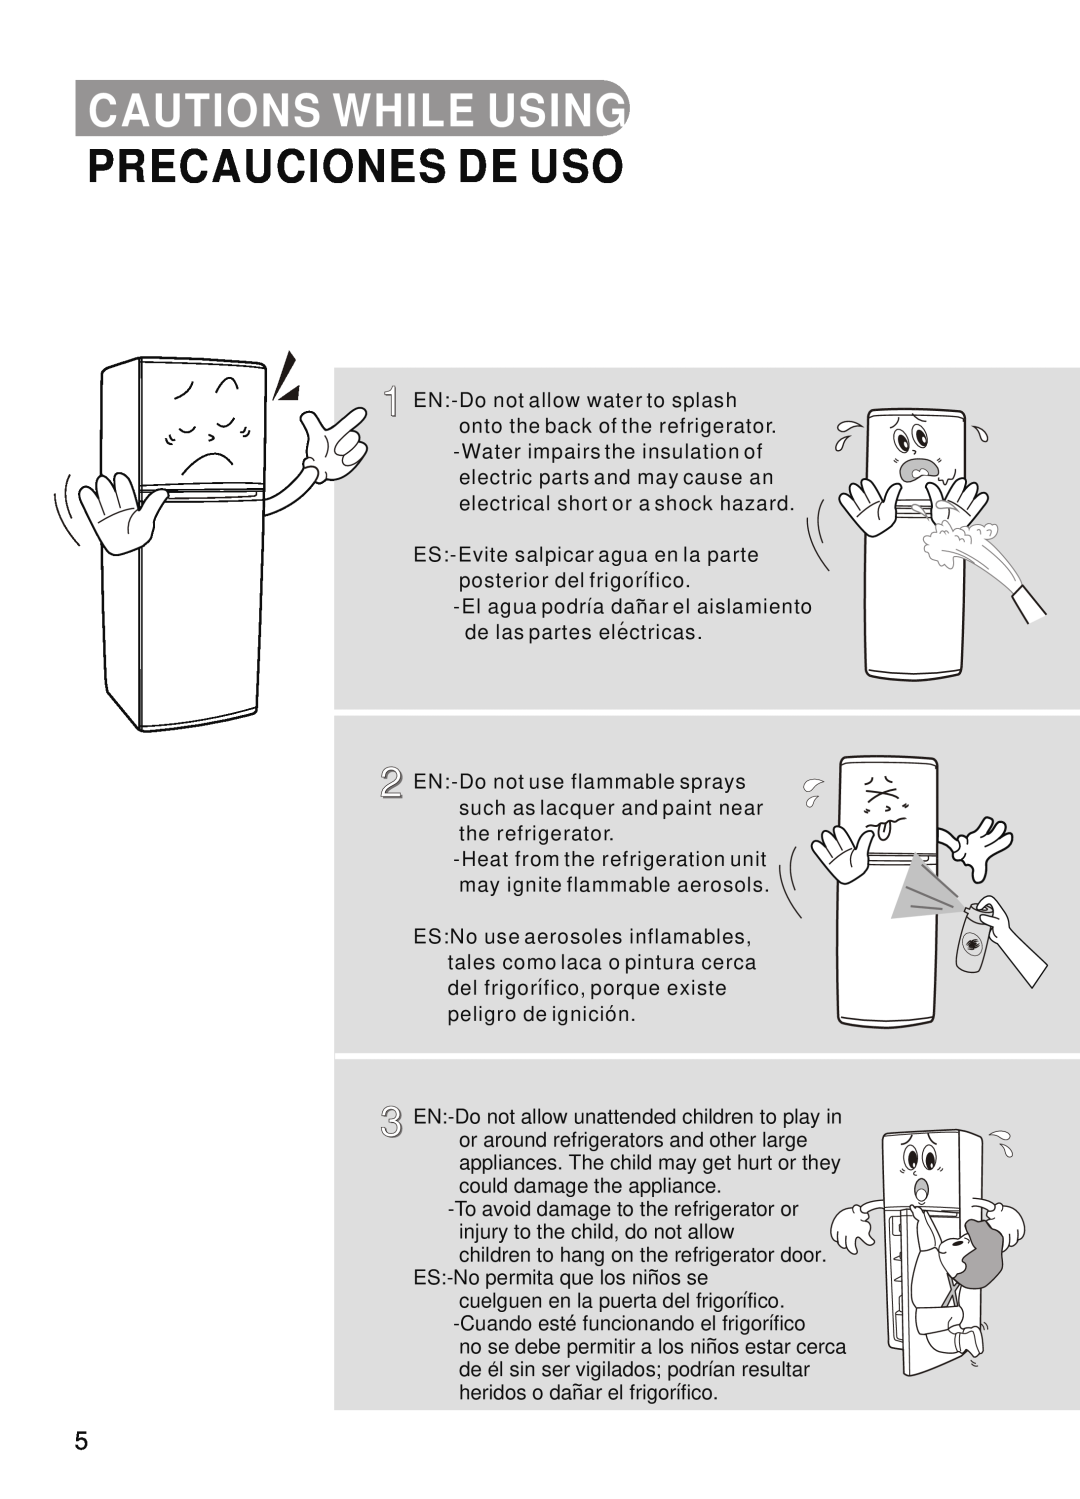 Samsung SR-42/43, SR-32/33, SR-28/29, SR-38/39 manual Cautions While Using, Precauciones De Uso 